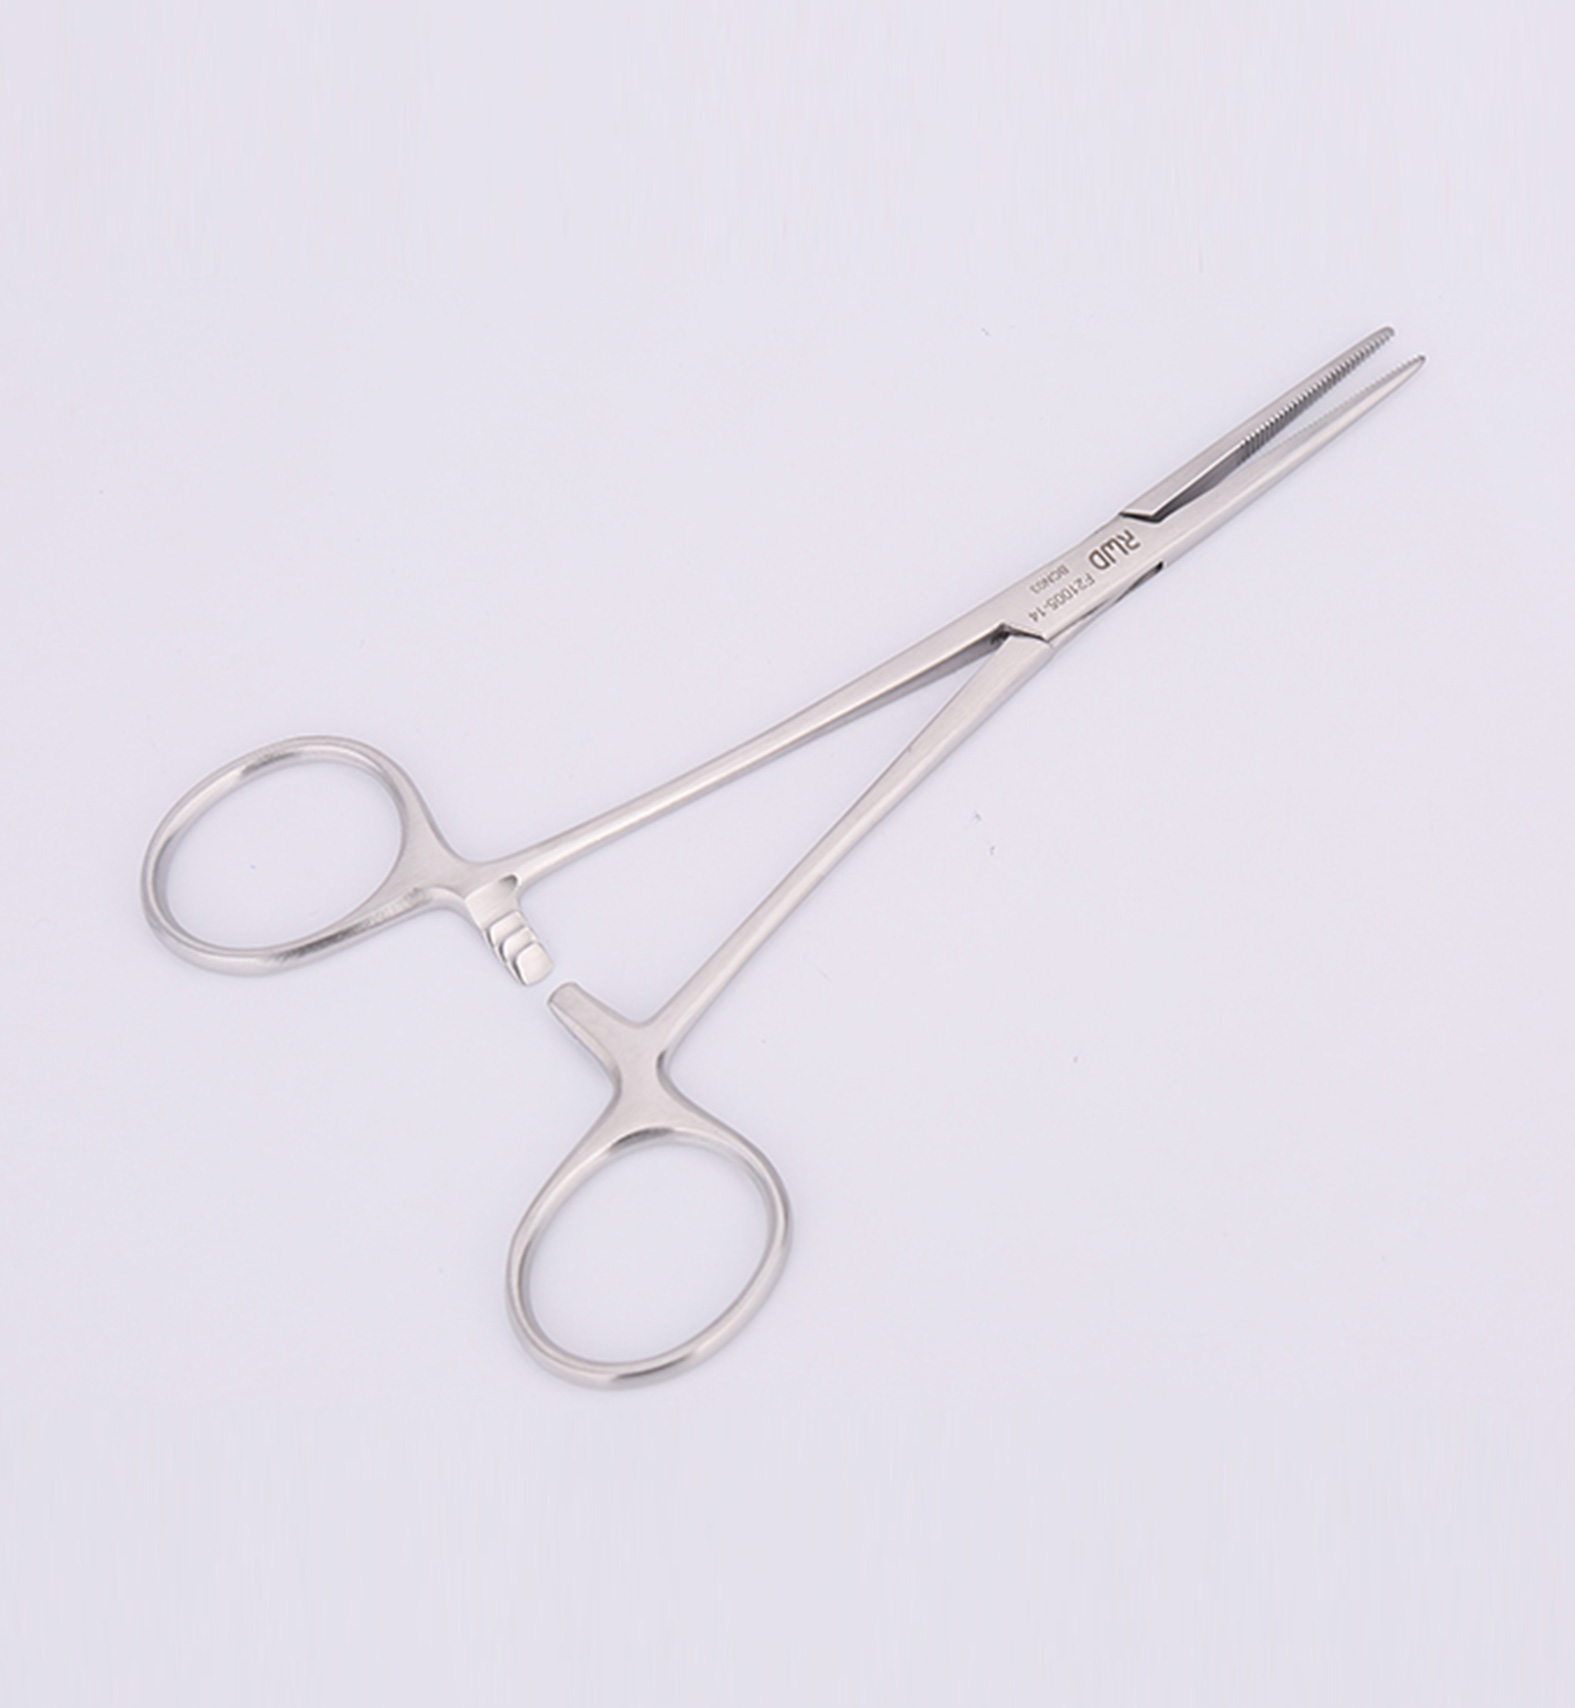 Artery Forceps Surgical Scissors